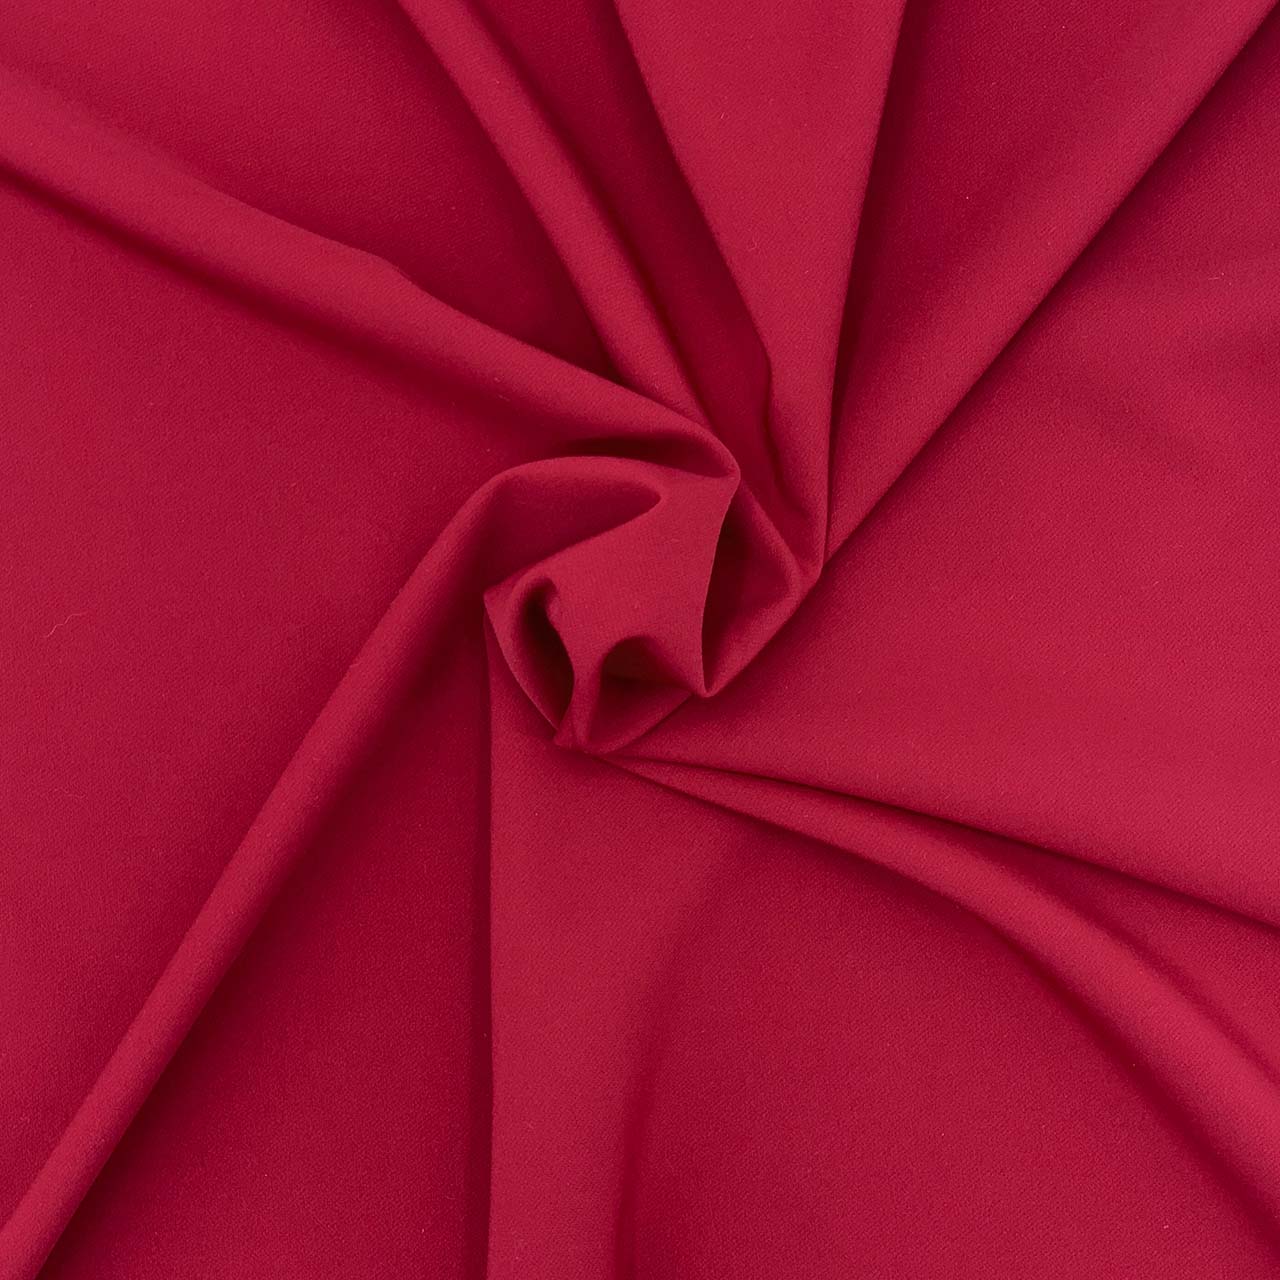 italian crepe fabric rubino red crepe fabric collection